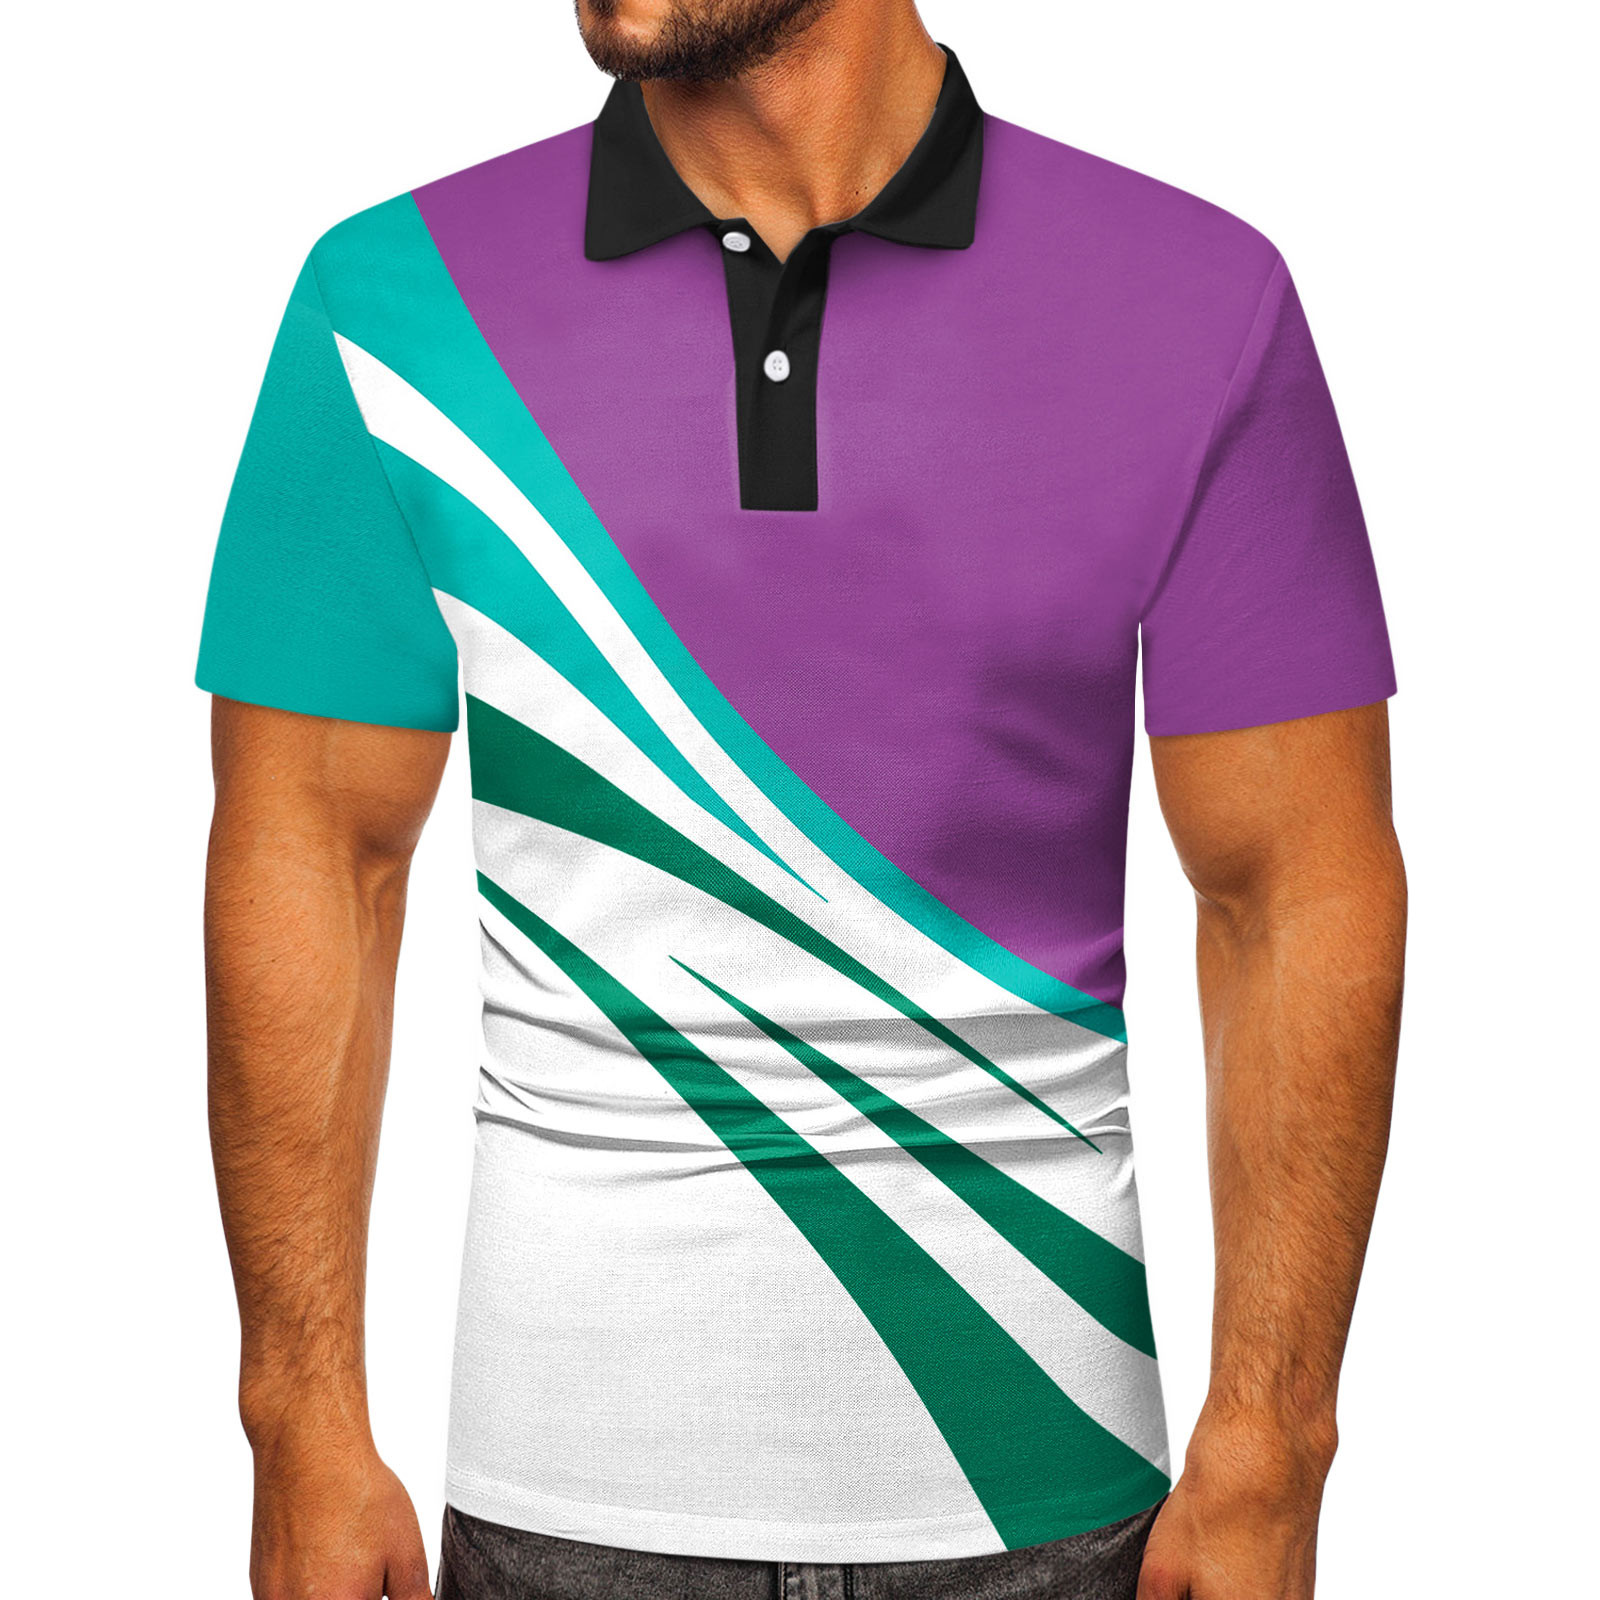 KaLI_store Going Out Tops Men's Short Sleeve Polo Shirt Breathable Golf  Shirt Tennis Casual T-Shirt Green,XXL